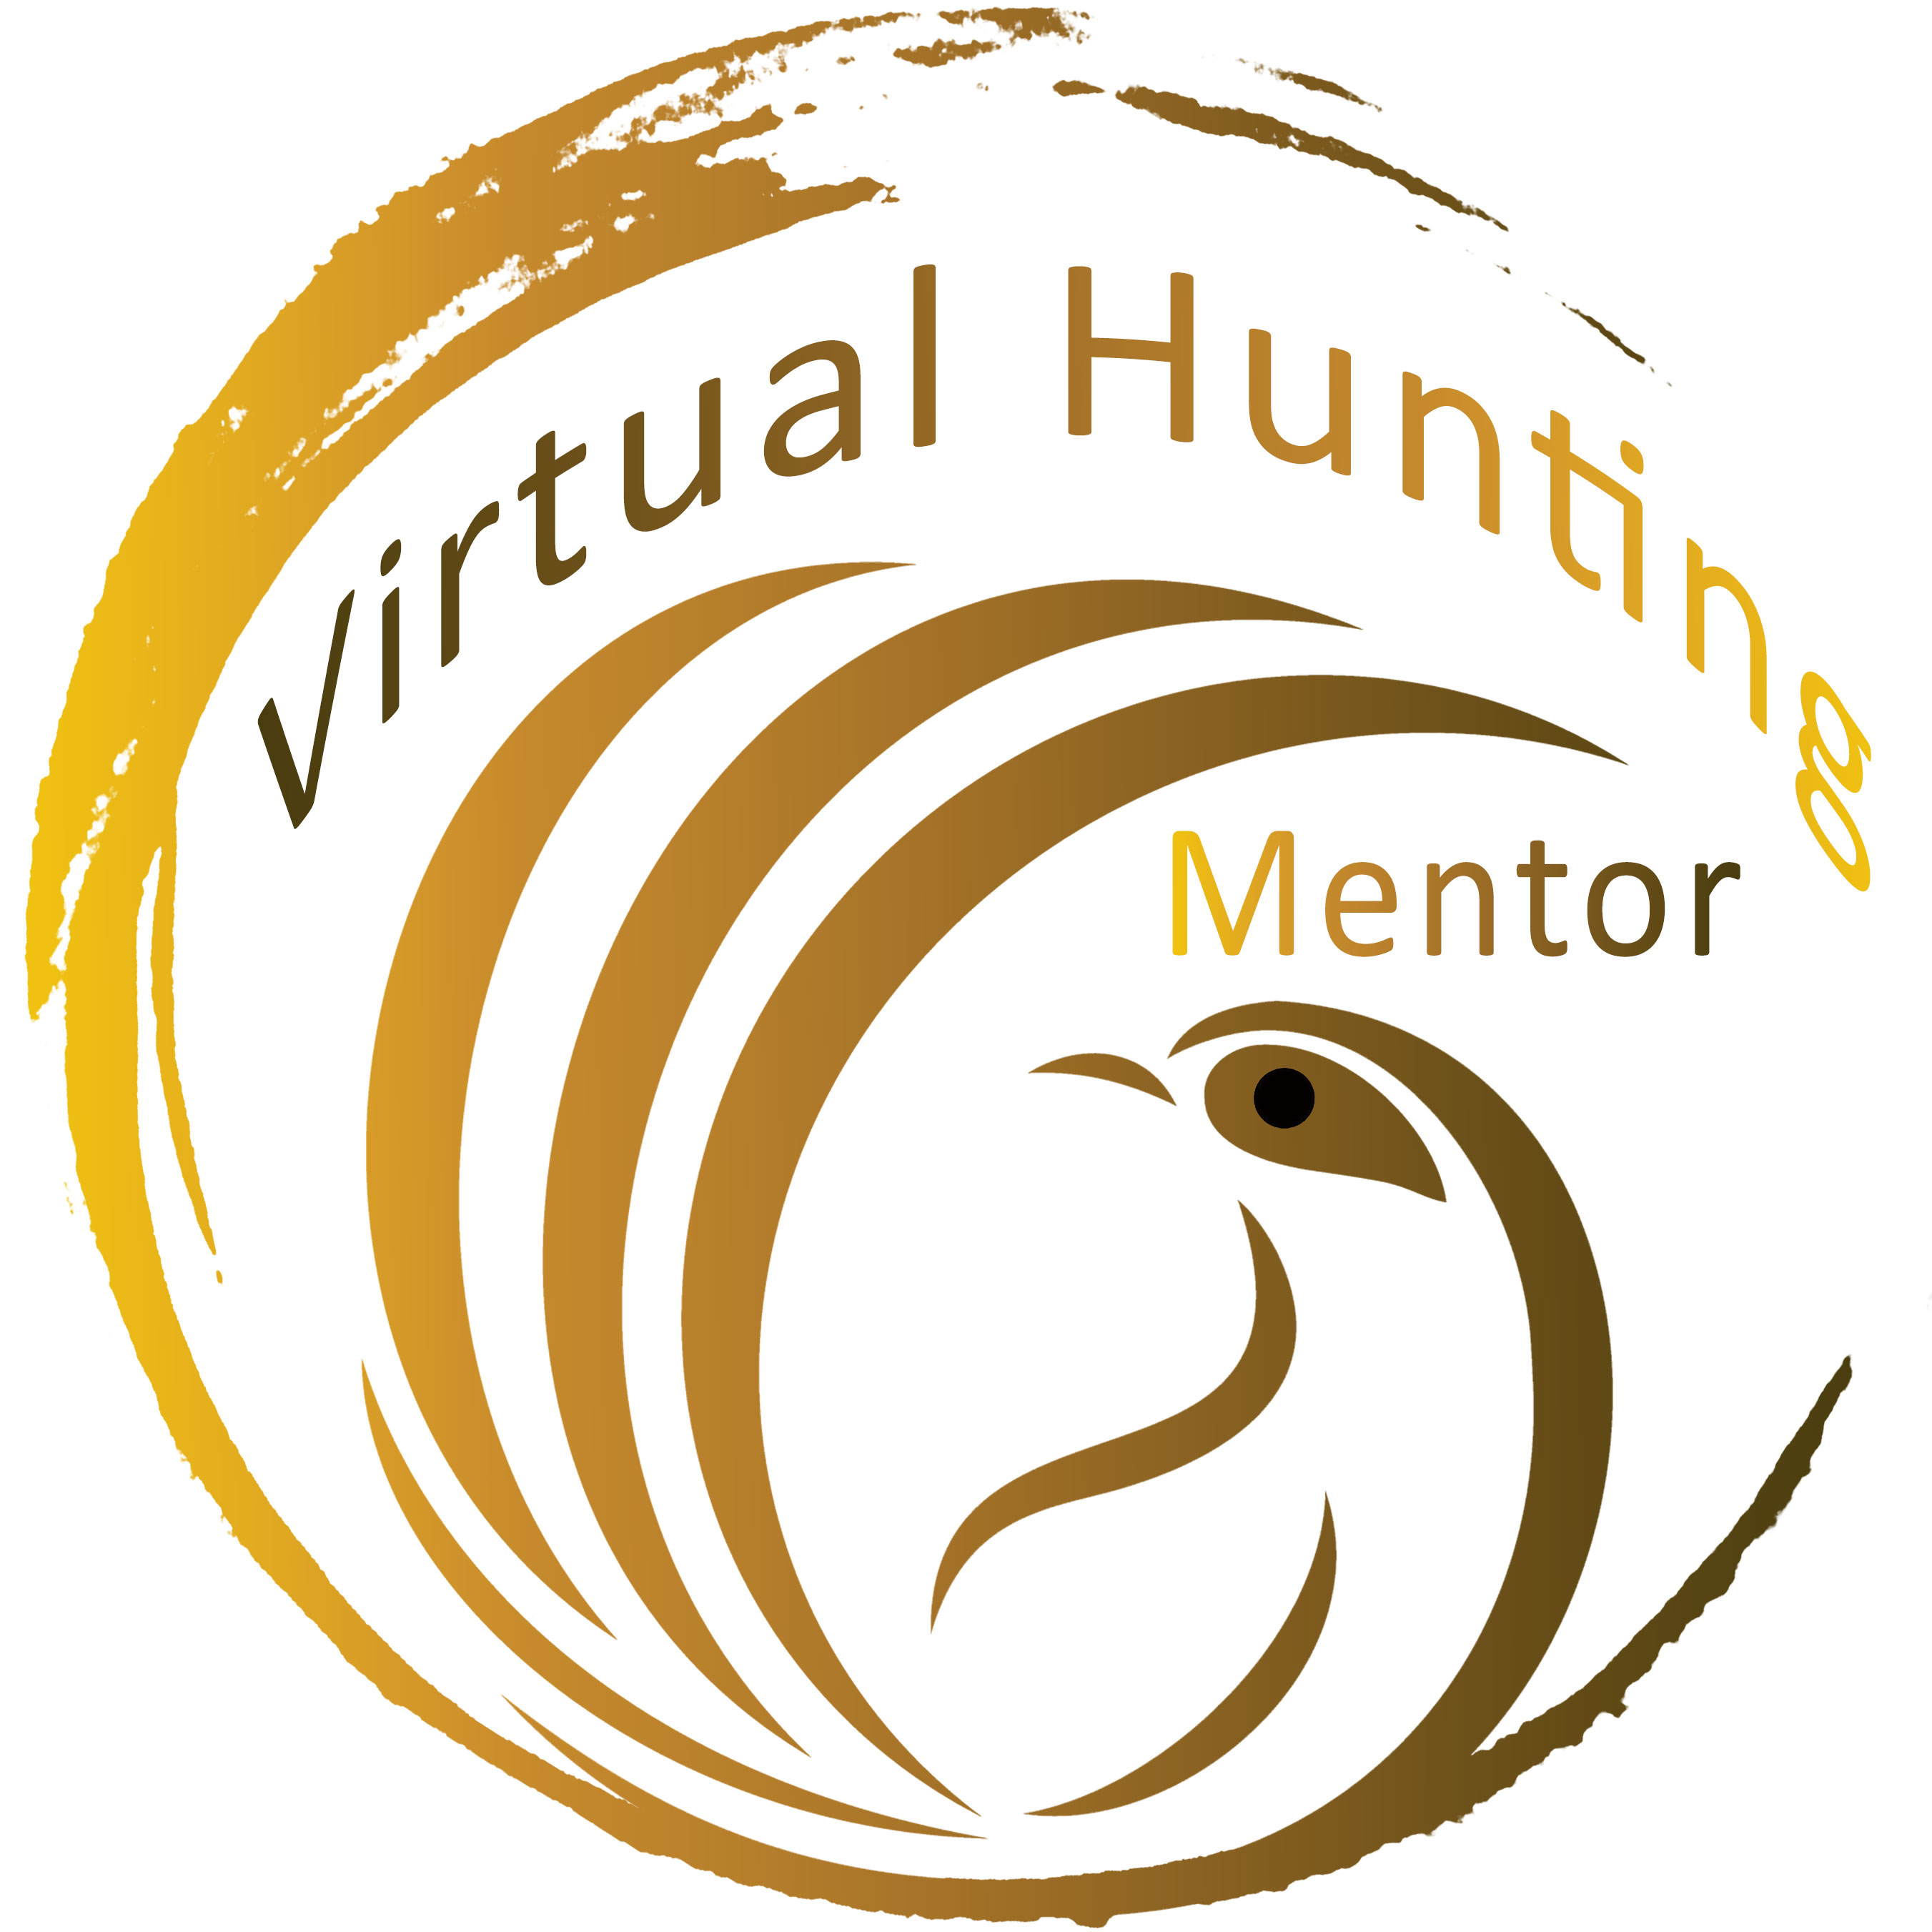 Hunting mentor logo - swoopy bird